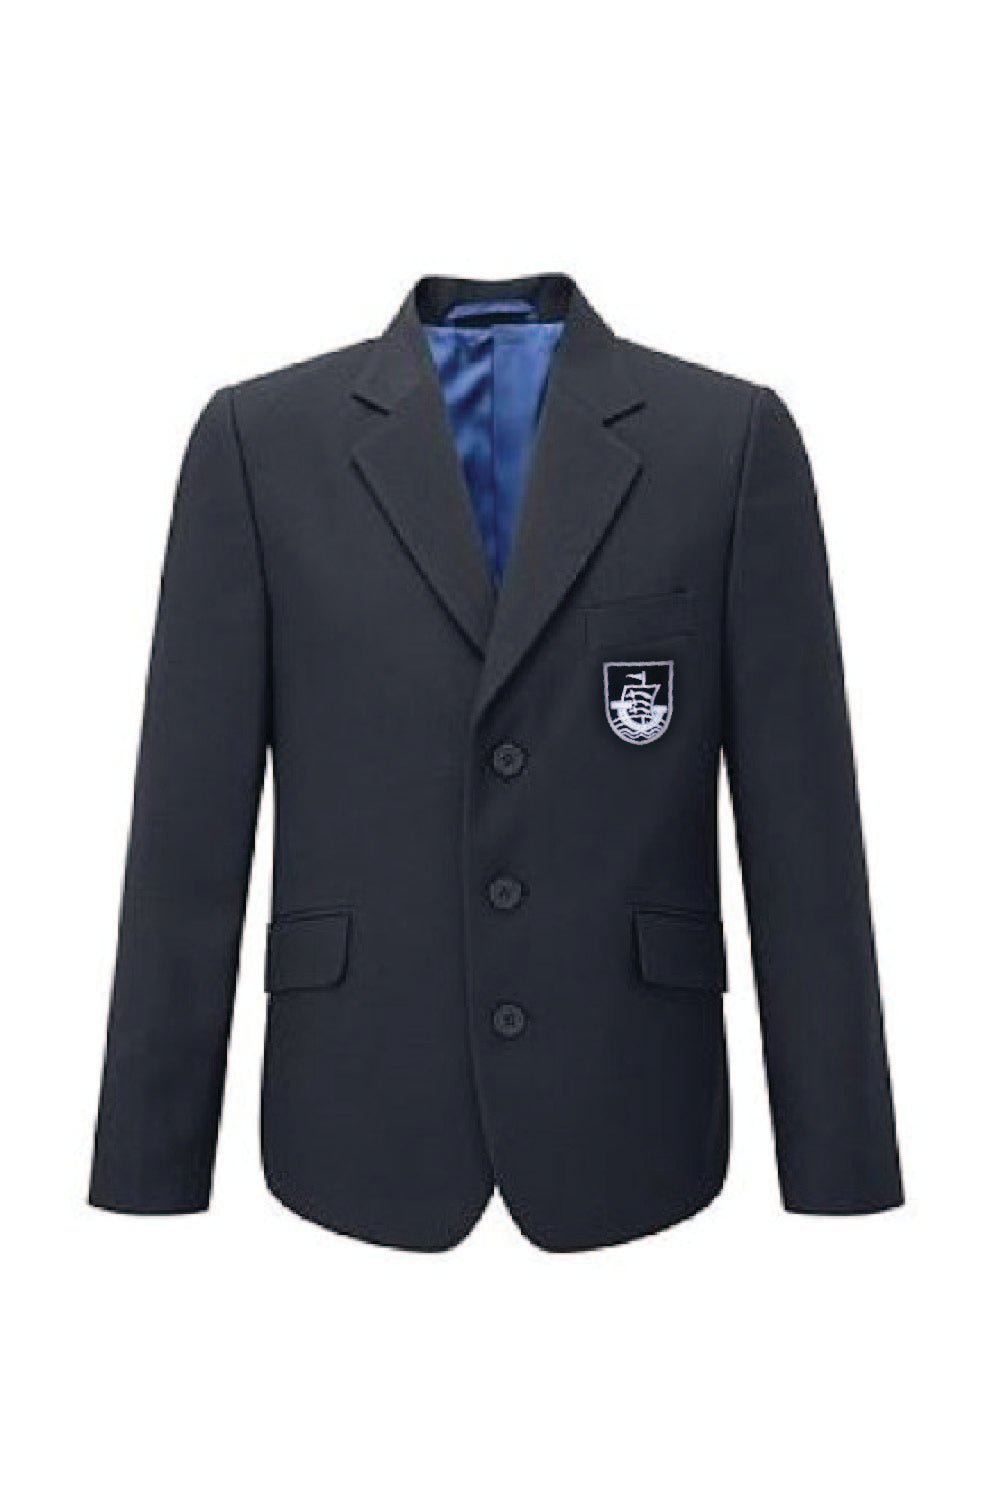 Hassenbrook Academy Boys School Blazer - Uniformwise Schoolwear